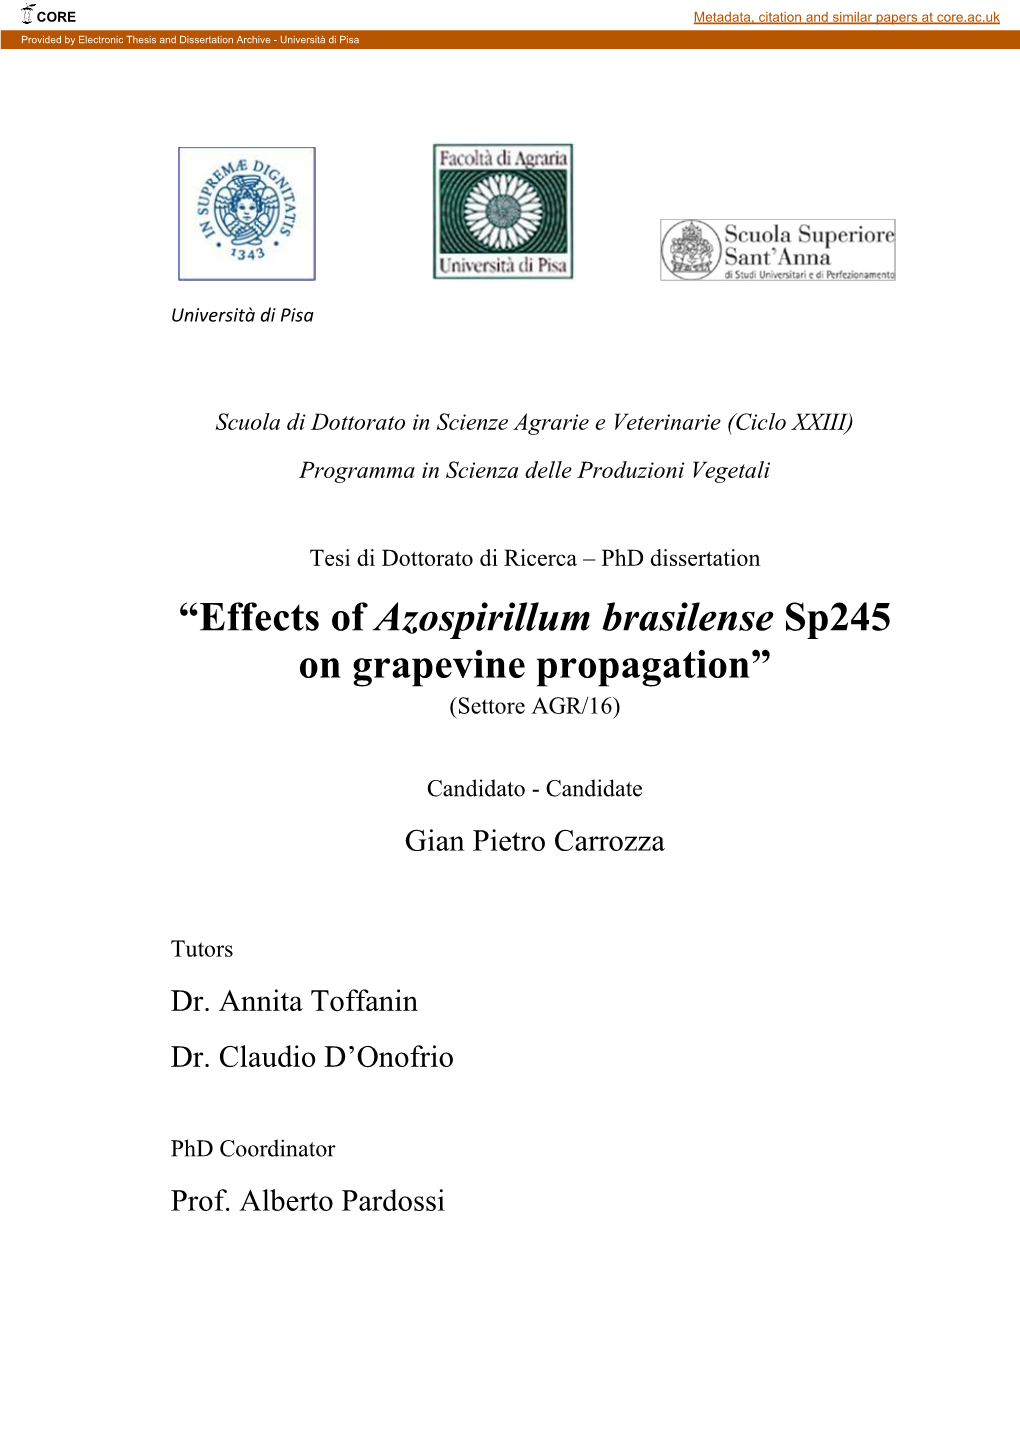 “Effects of Azospirillum Brasilense Sp245 on Grapevine Propagation” (Settore AGR/16)